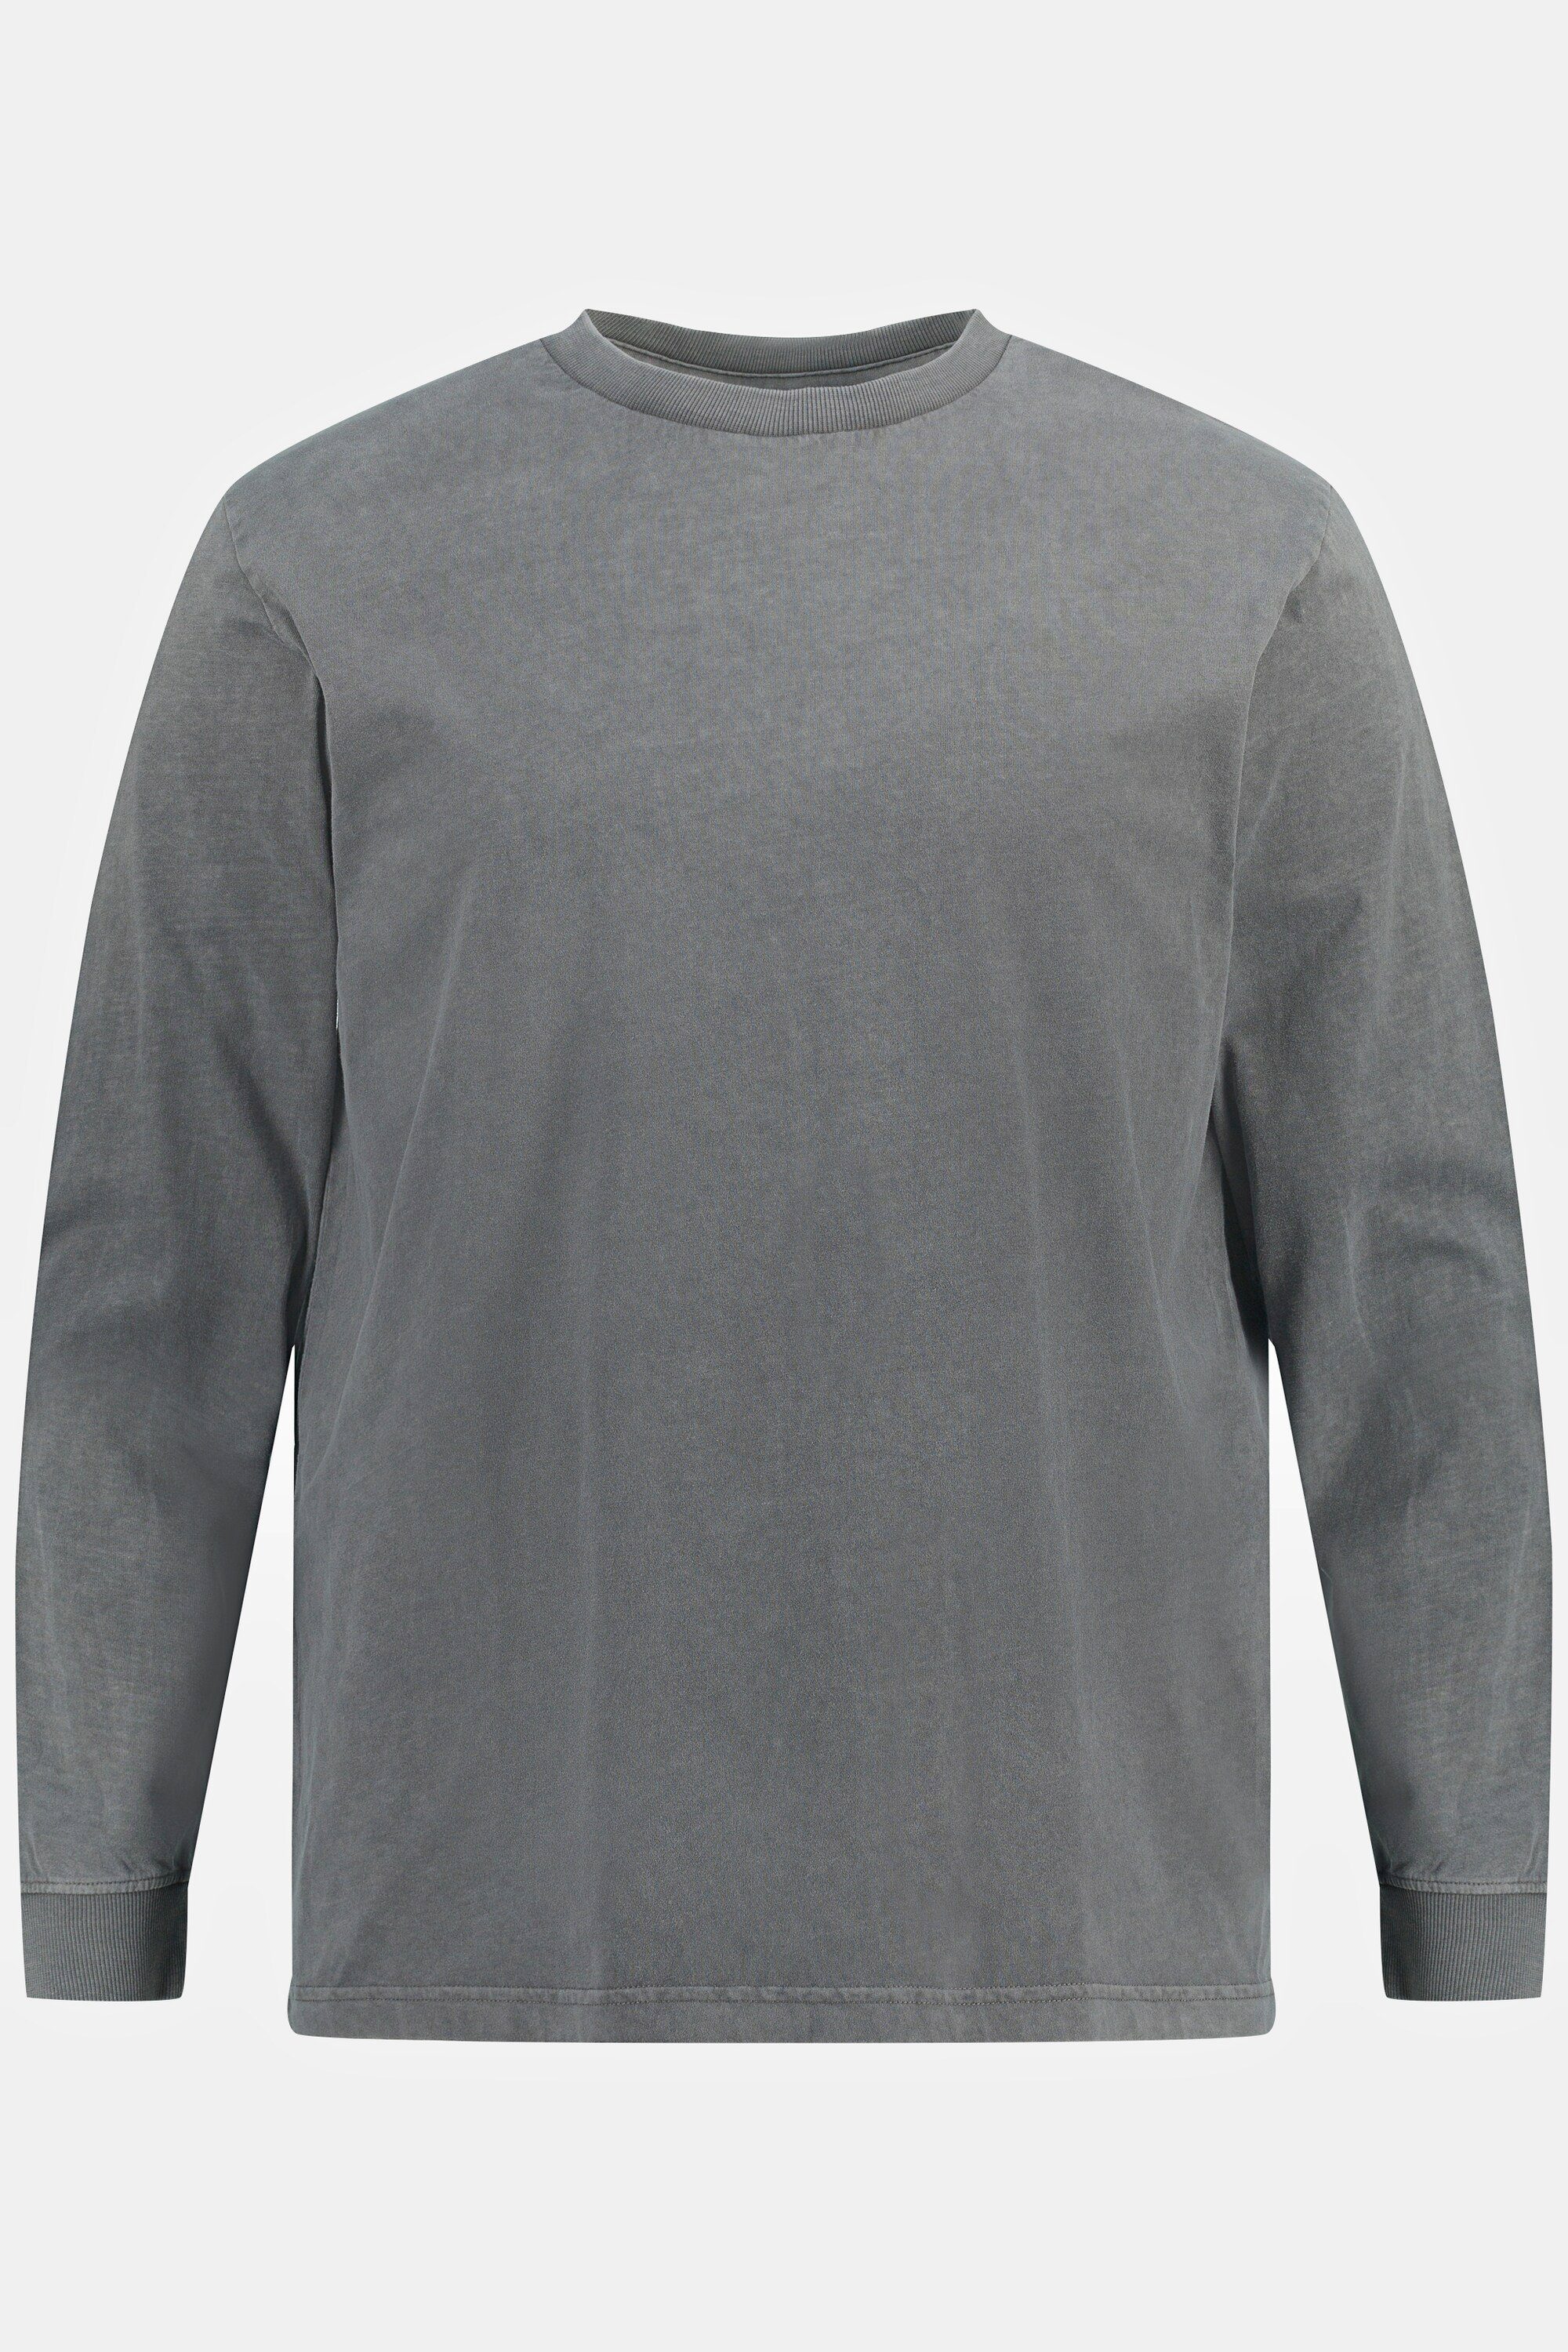 Print Rundhals T-Shirt Rücken Langarmshirt dyed JP1880 garment